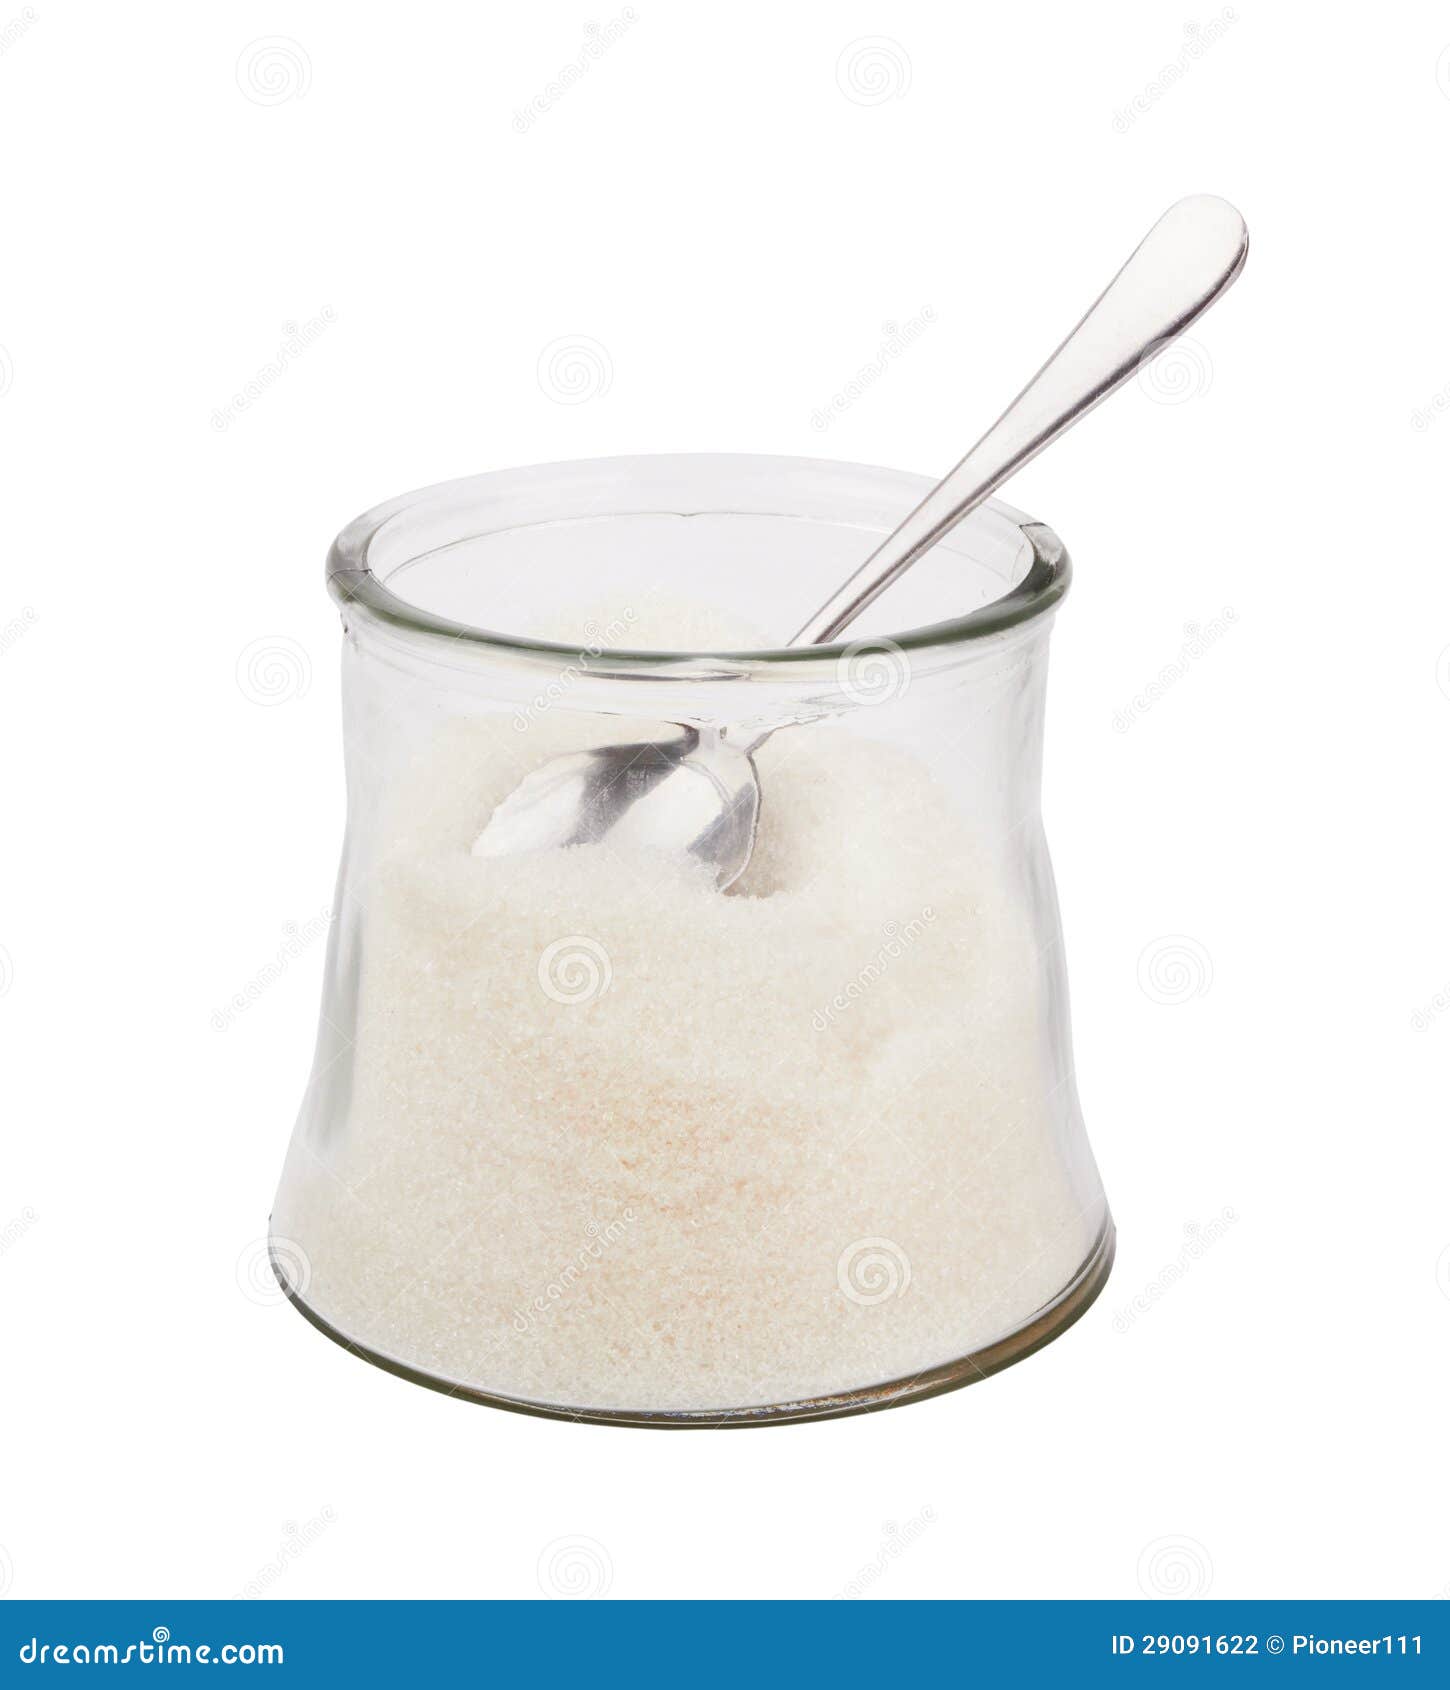 Сахар растительное стакан. Сахарница с сахаром. Сахарный песок в сахарнице. Сахарница на белом фоне. Сахар в сахарнице на белом фоне.